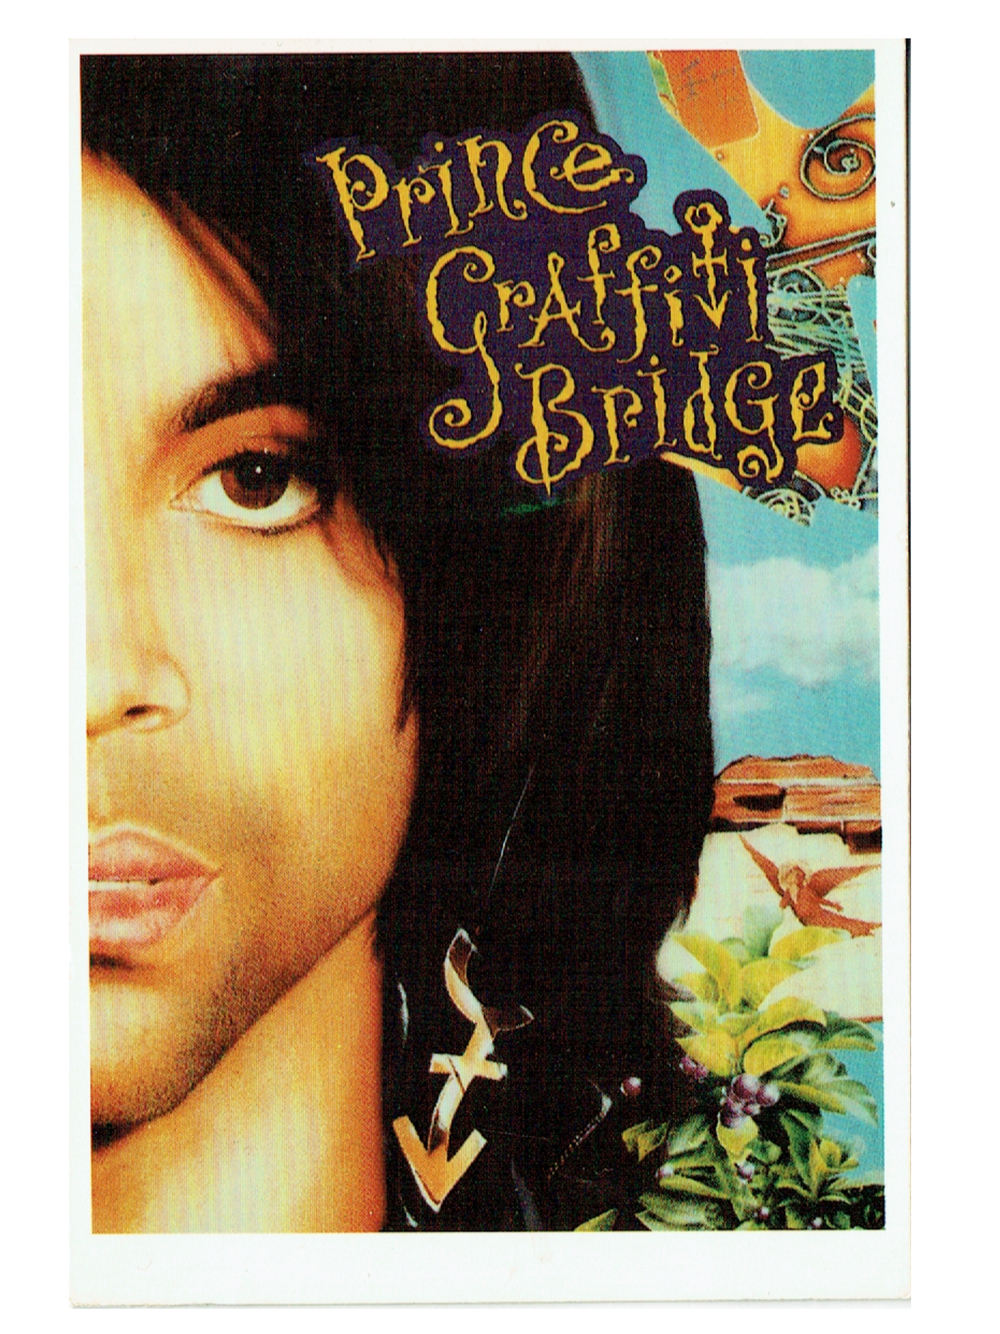 Prince – Postcard Original Printed In England Graffiti Bridge